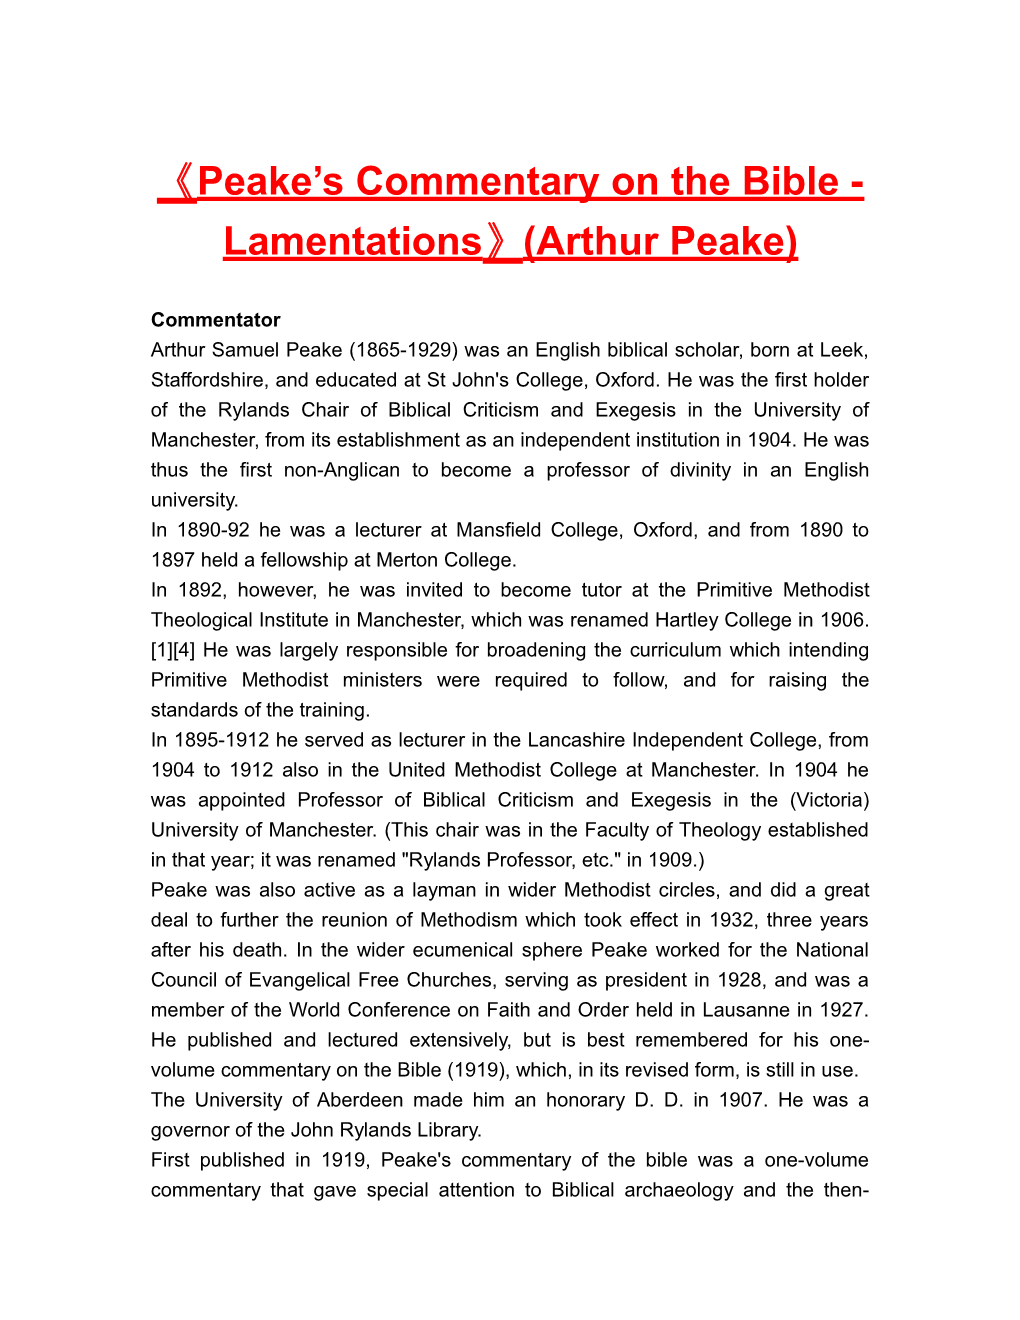 Peake S Commentary on the Bible - Lamentations (Arthur Peake)